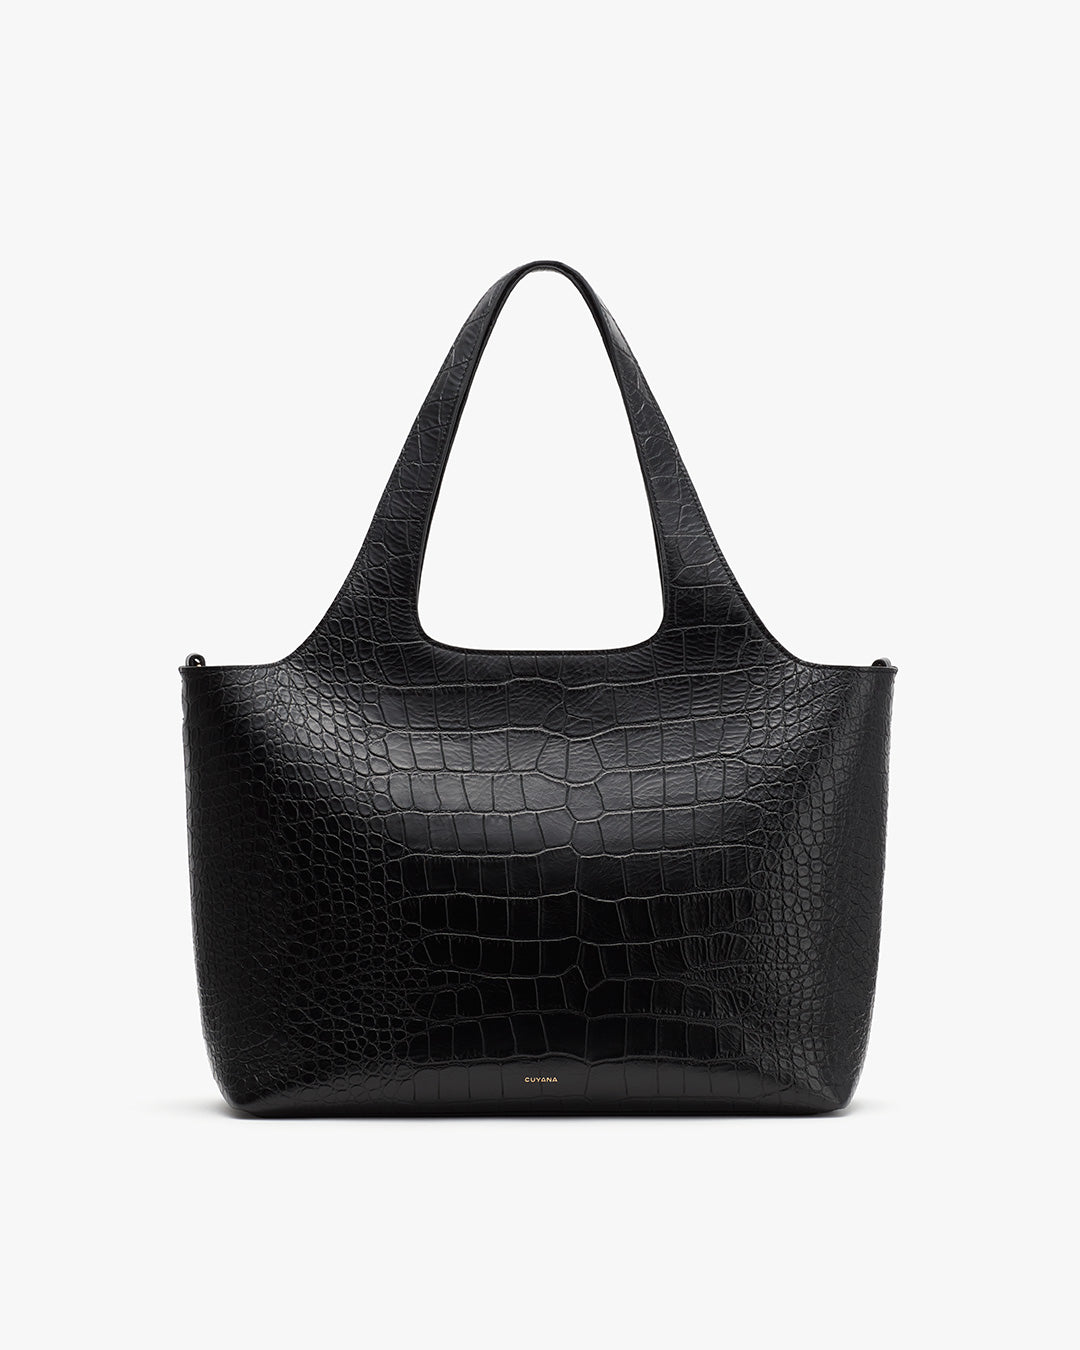 Mini Satchel Black Crossbody Bag | Cambridge Satchel Co. Black Bag | Personalised Embossing Available